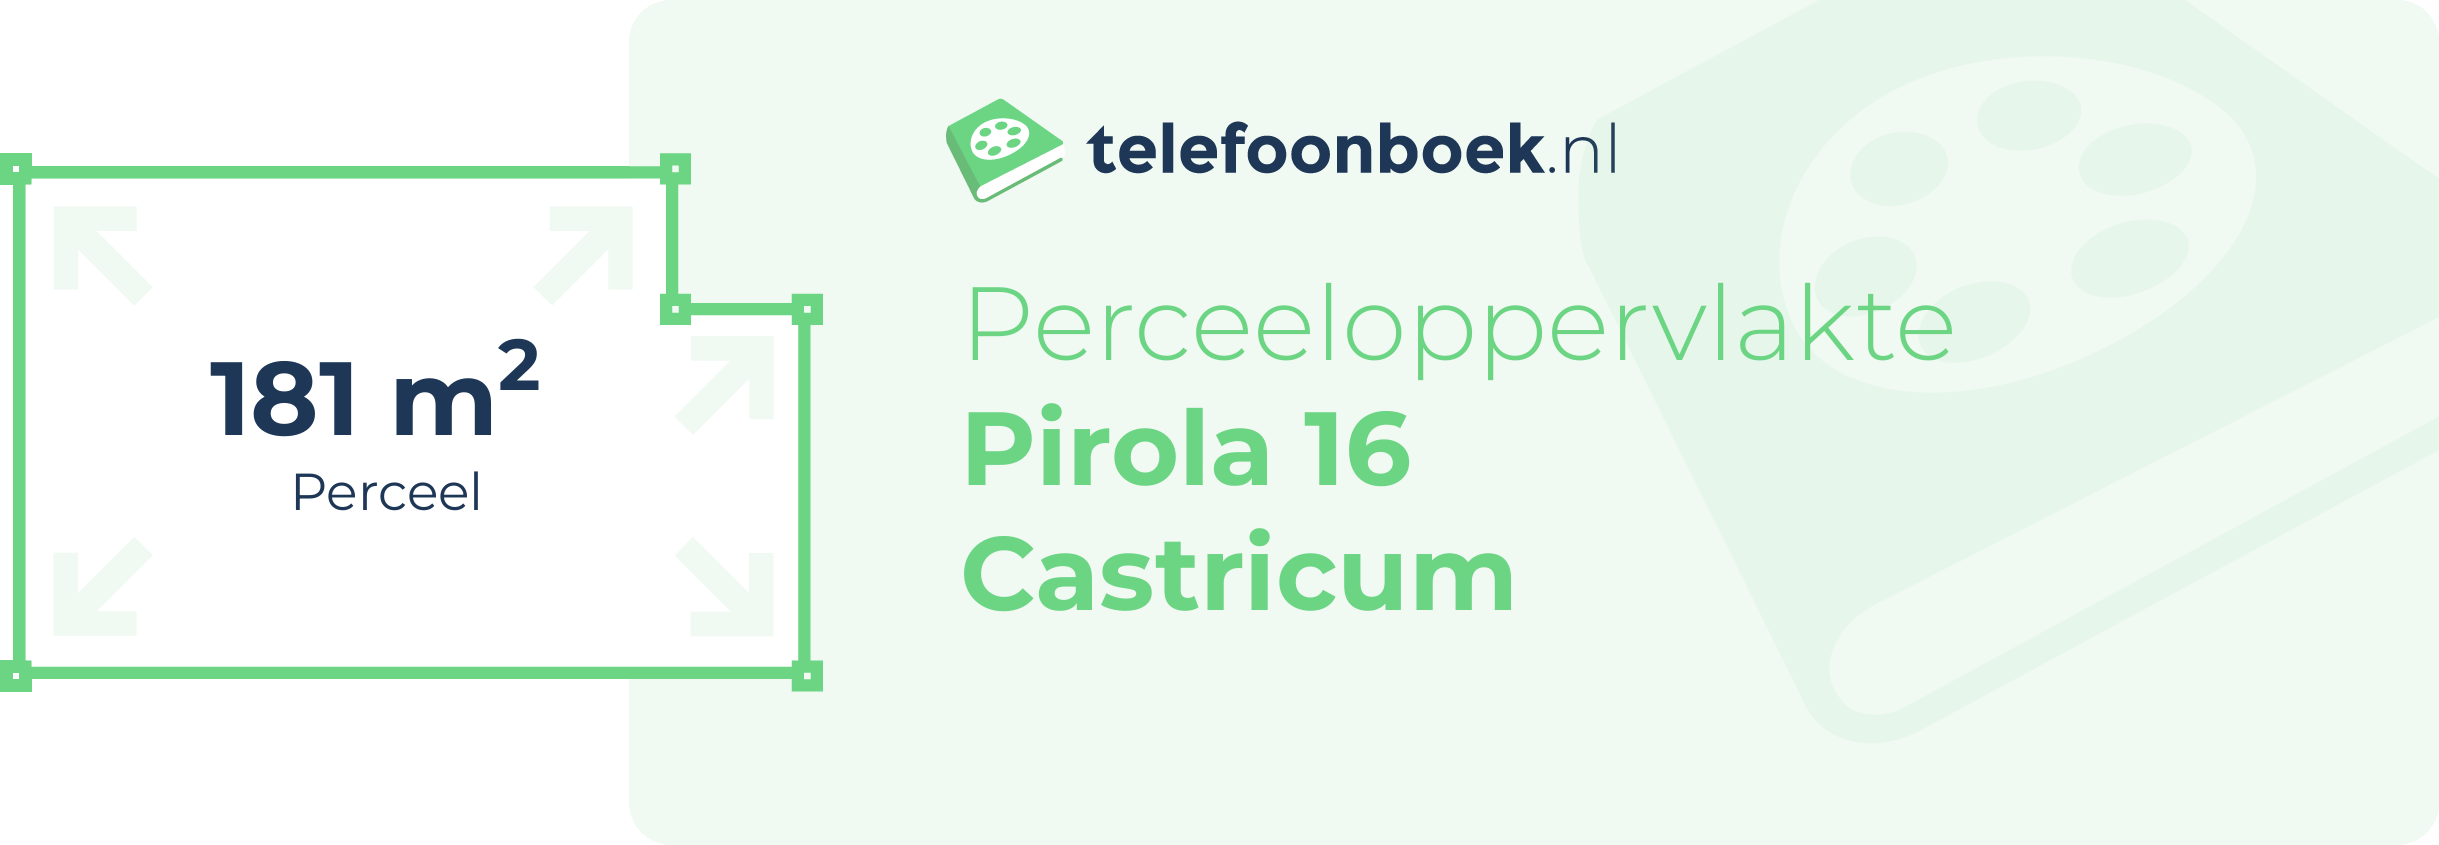 Perceeloppervlakte Pirola 16 Castricum